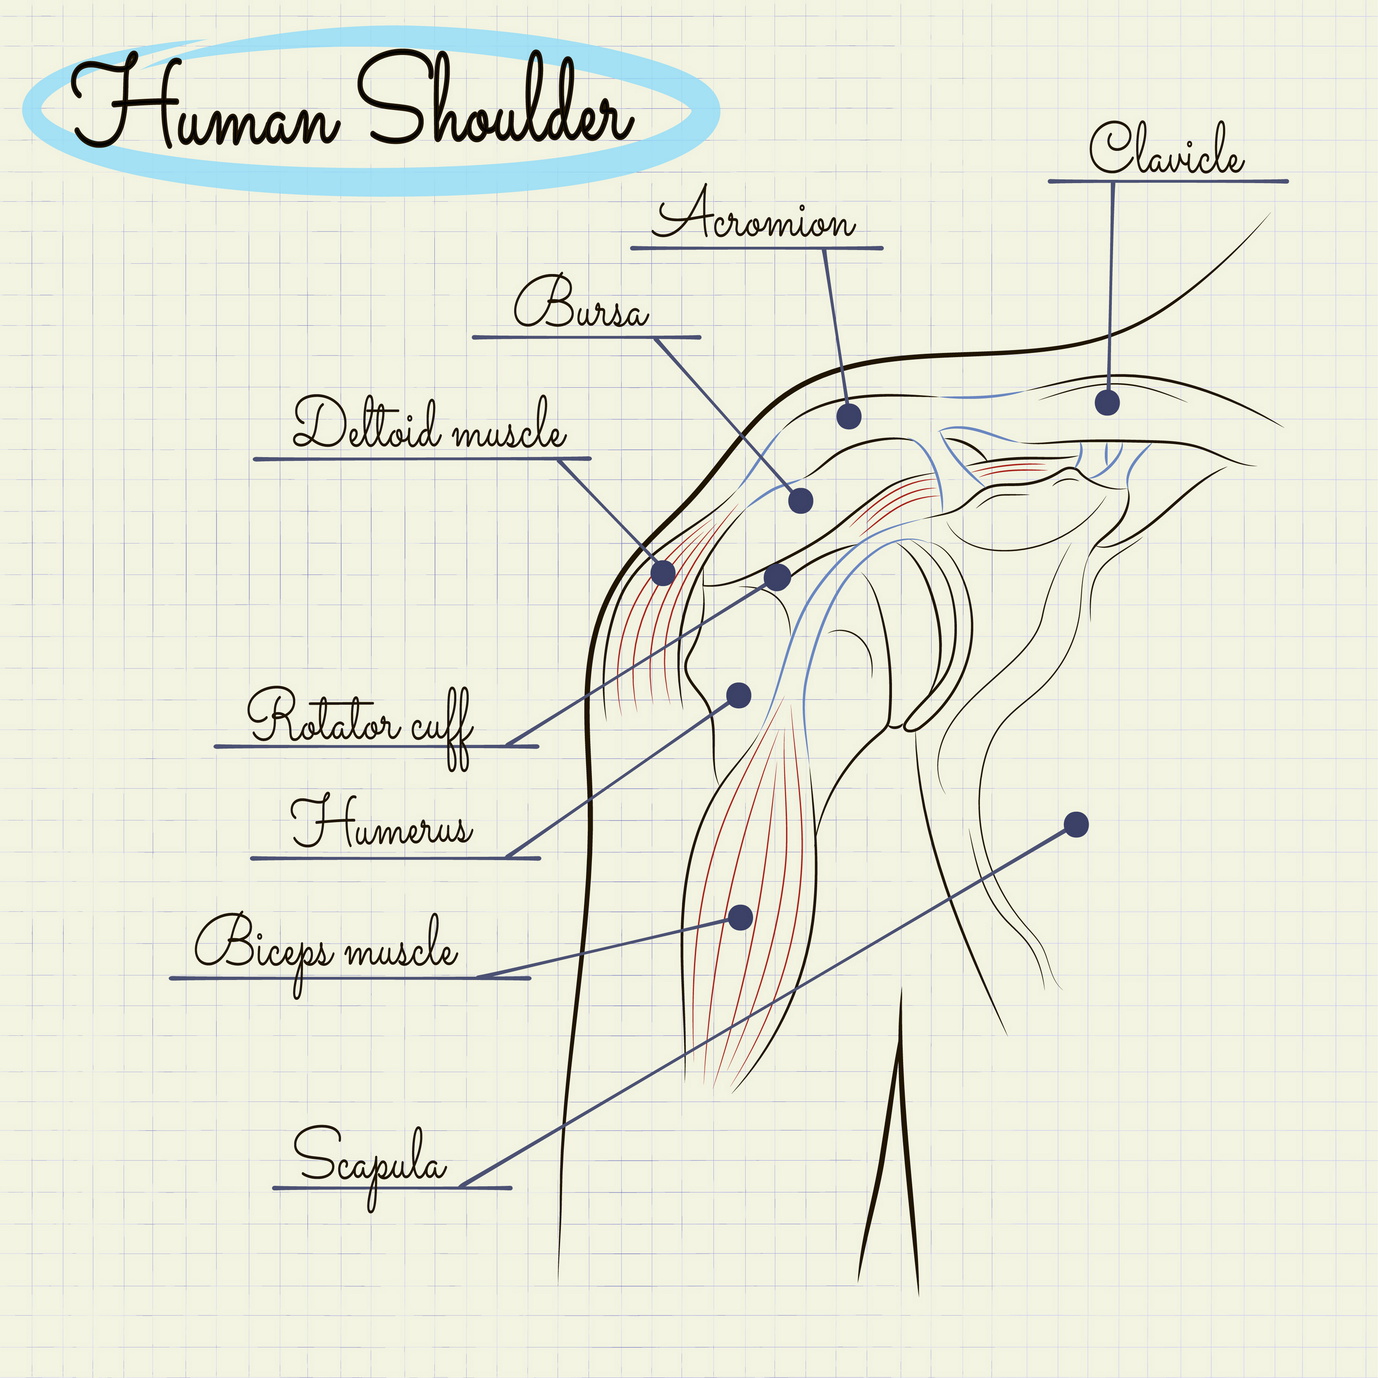 Human shoulder